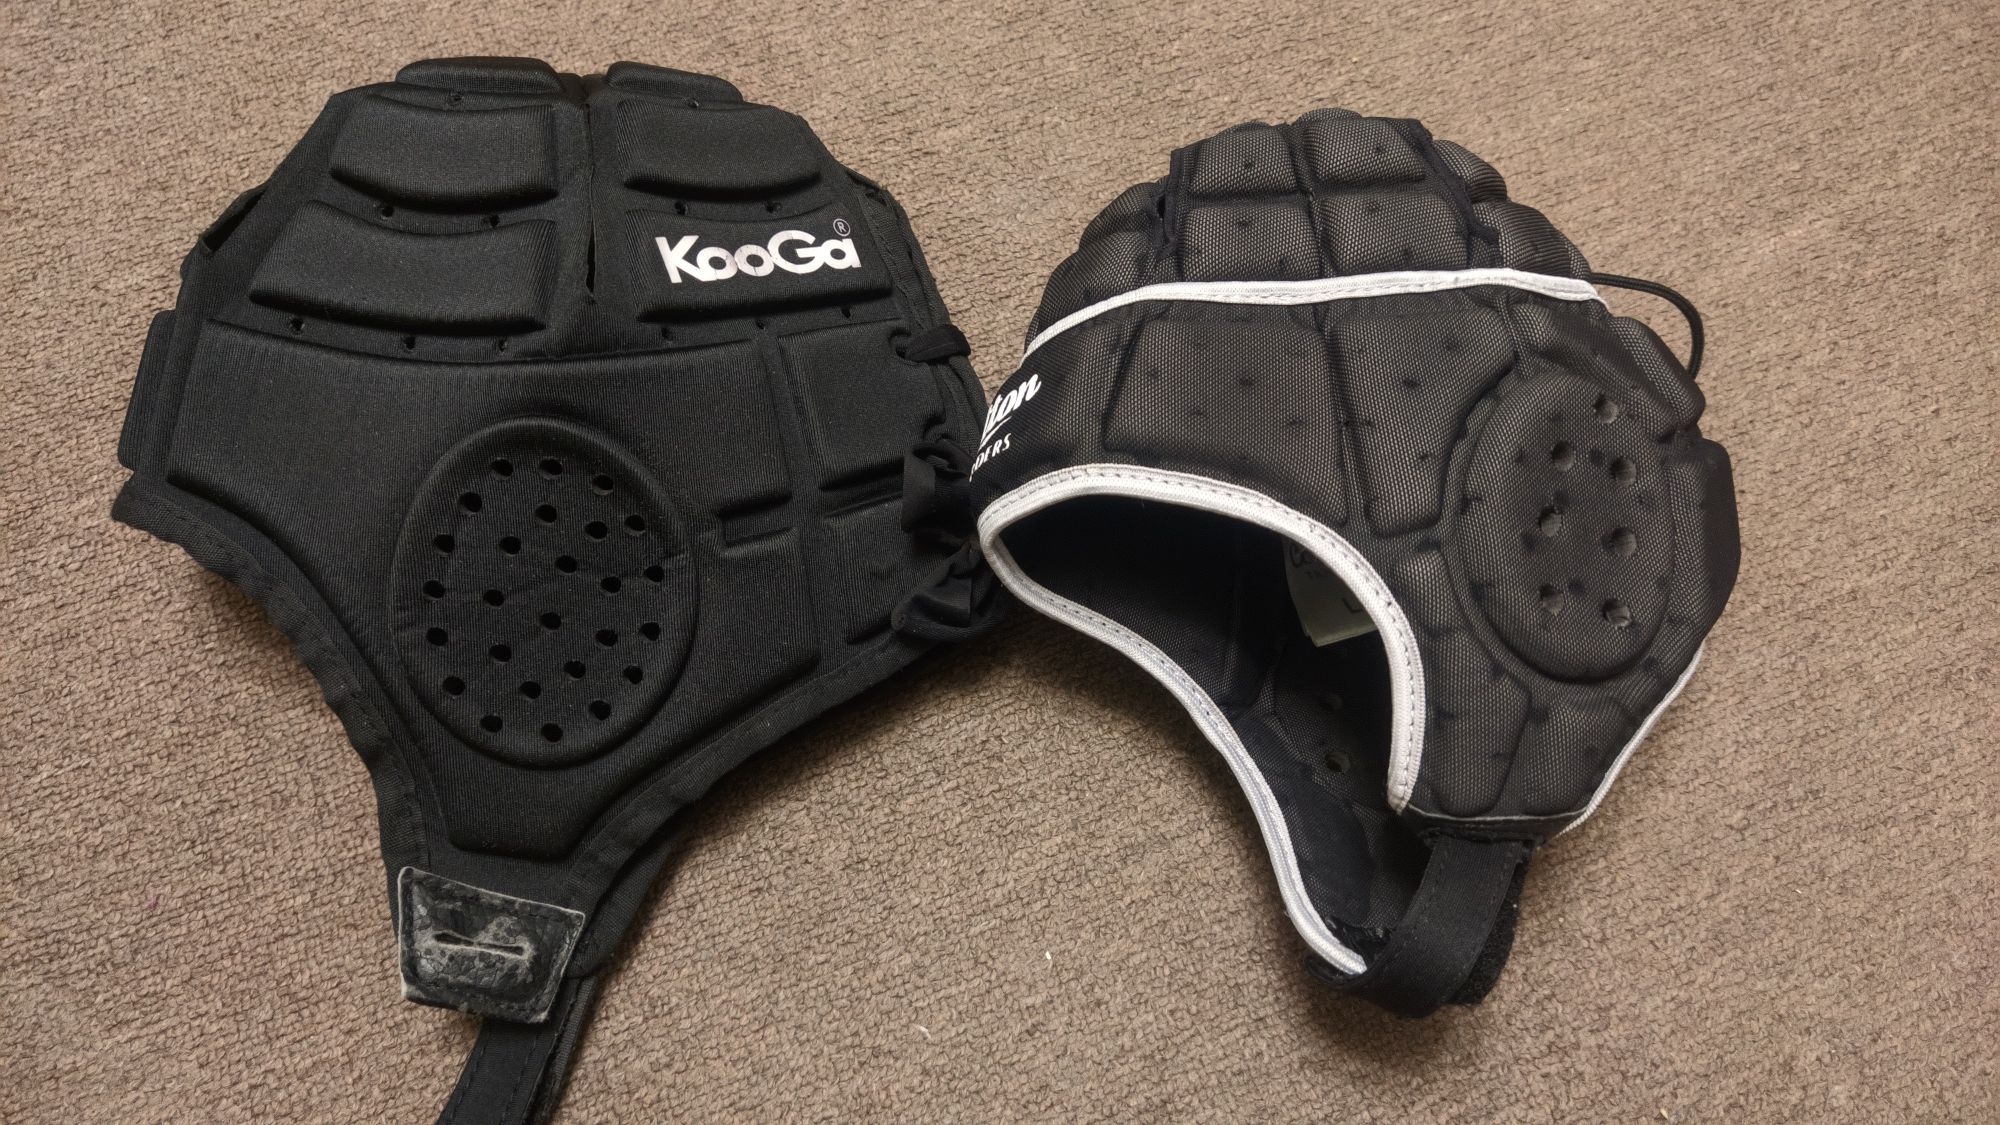 Защита шлем Canterbury kooga

Для регби